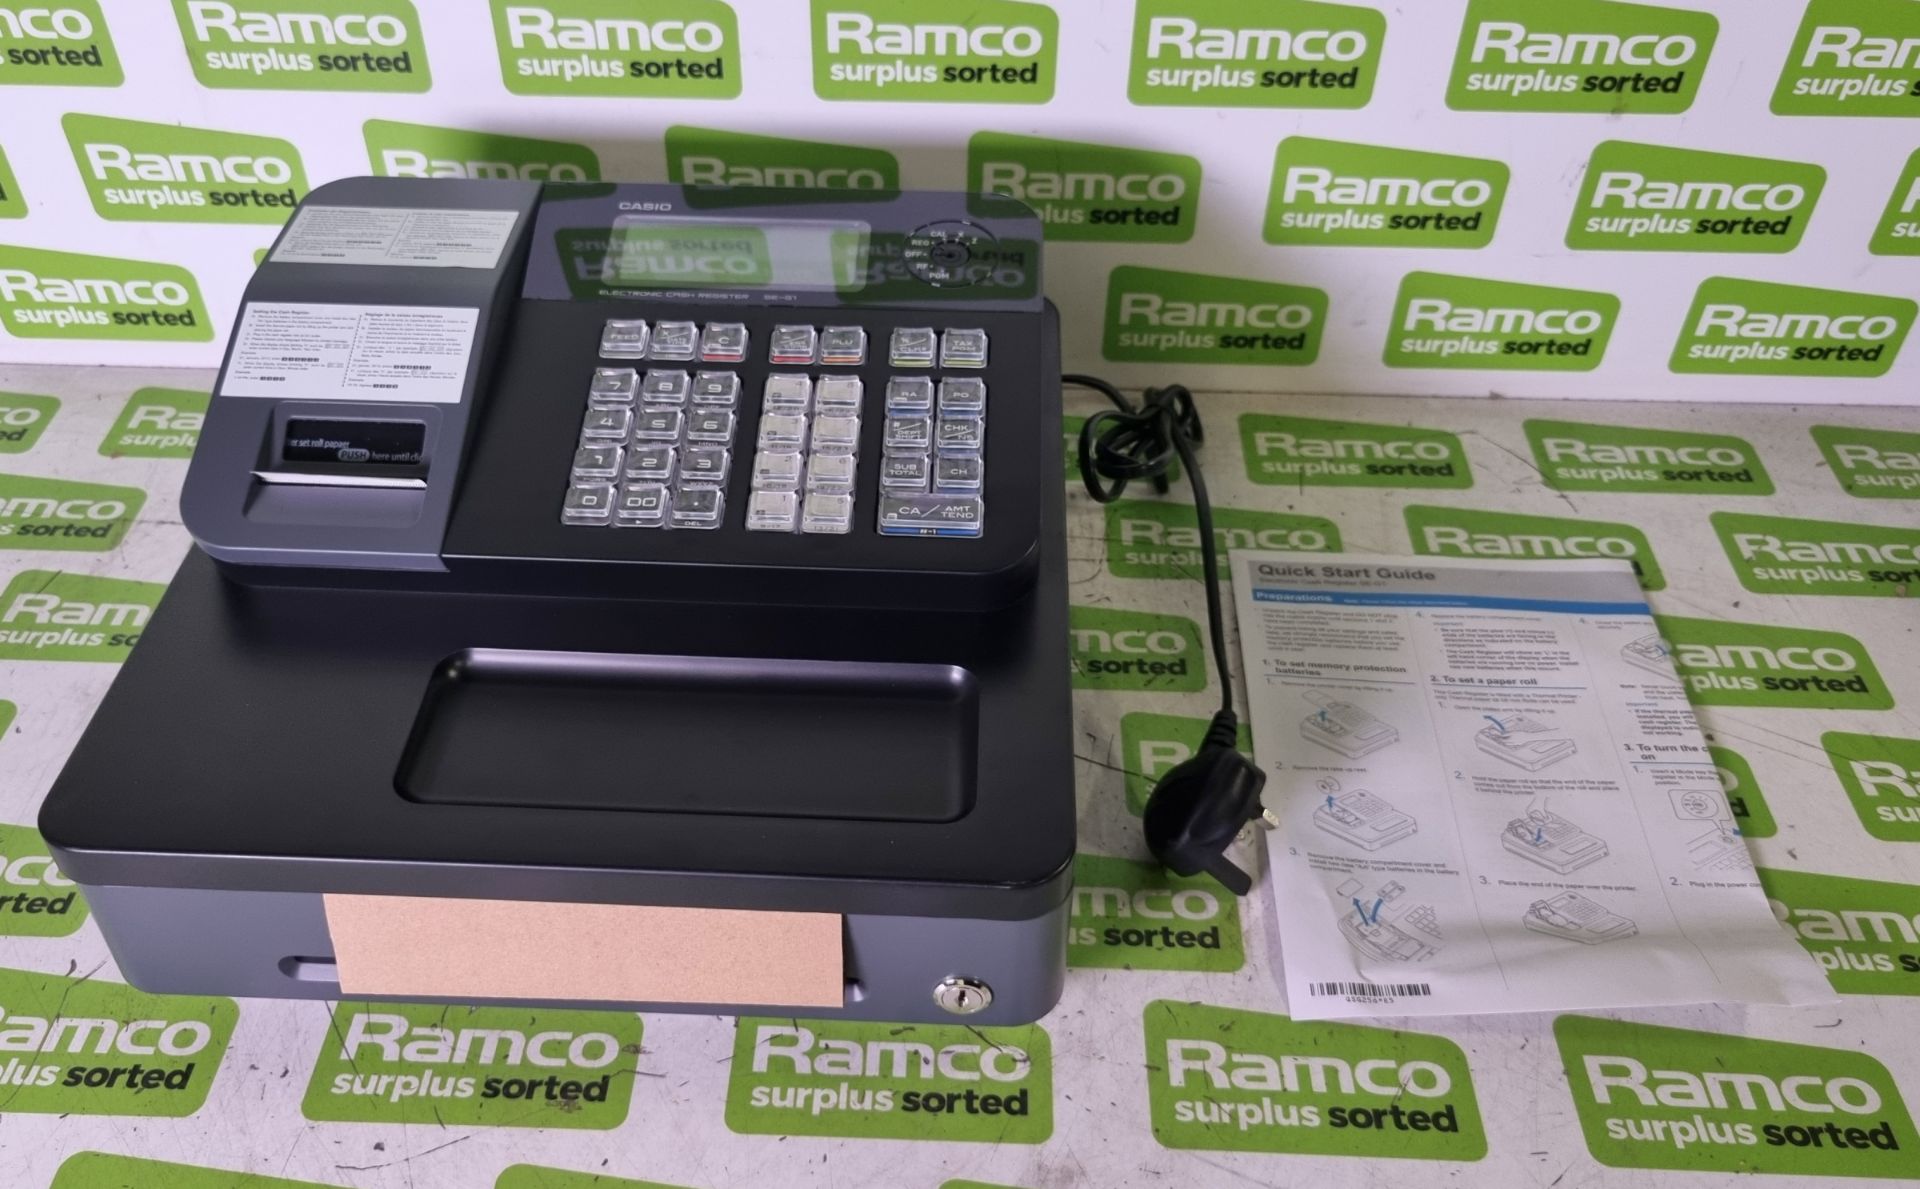 Casio SE-G1 electronic cash register - Image 2 of 5